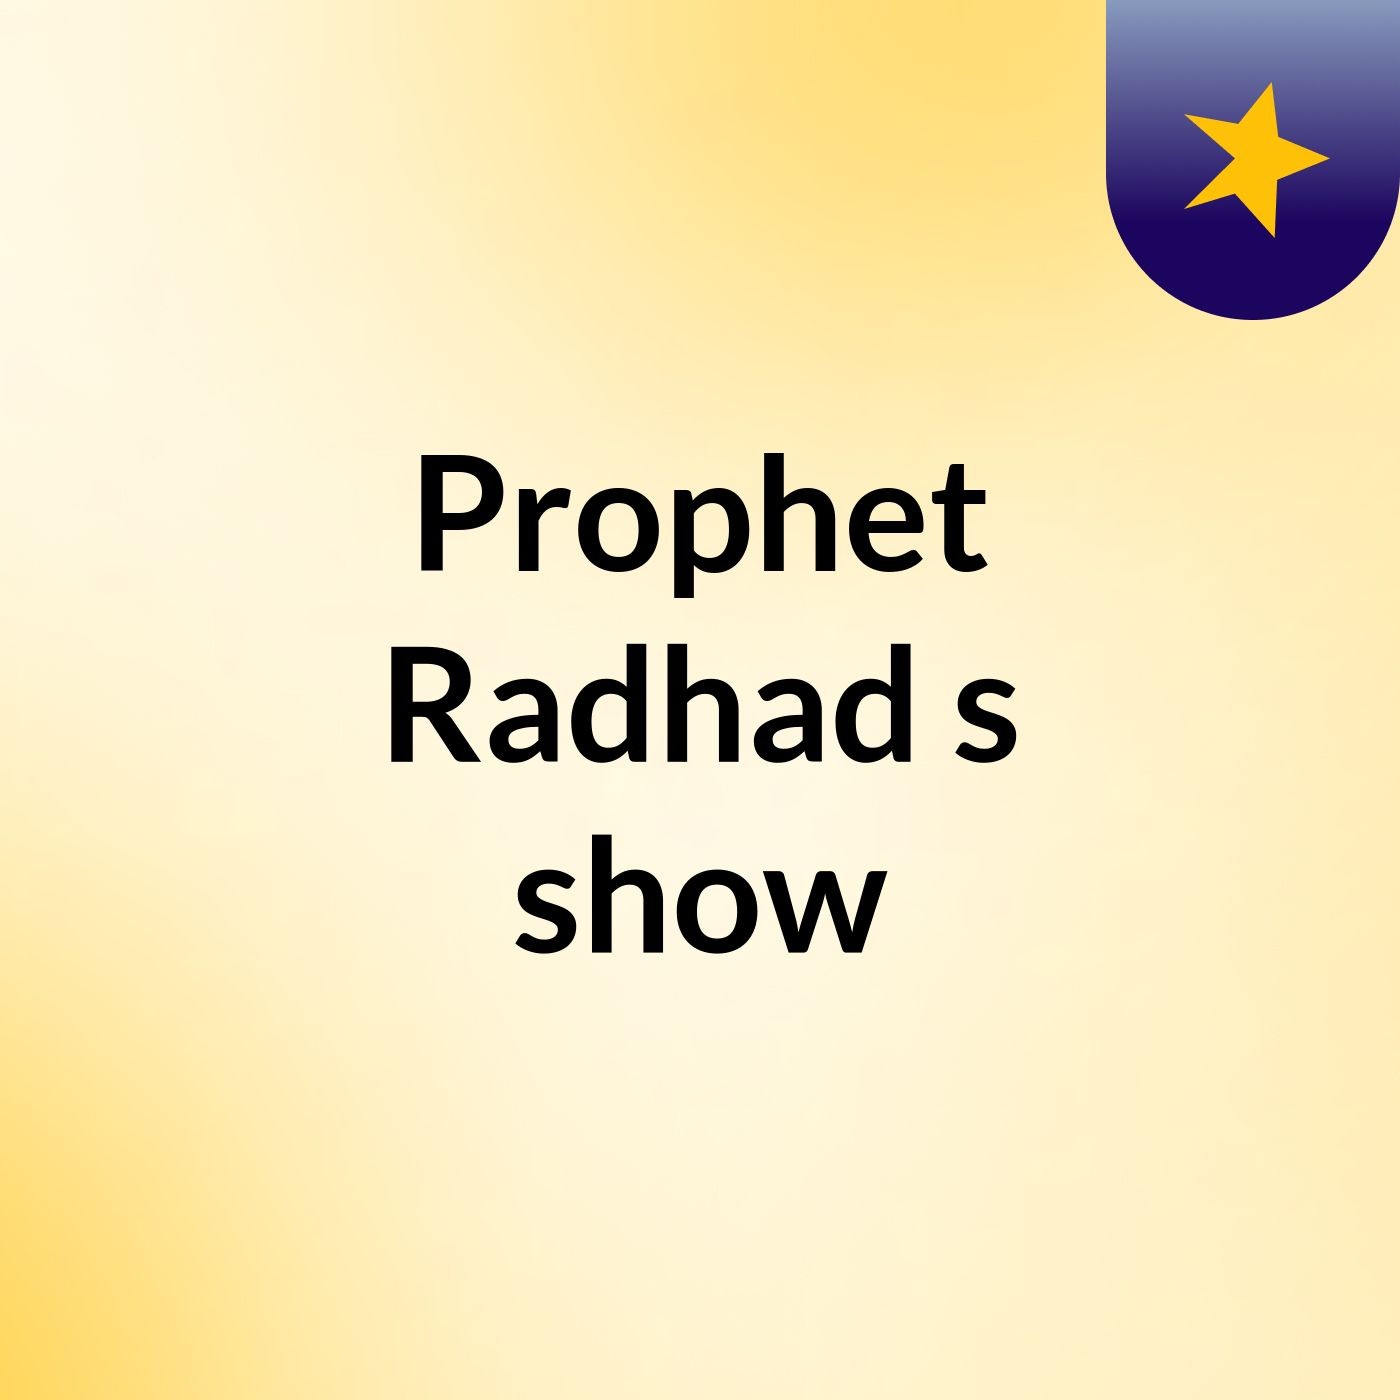 Prophet Radhad's show